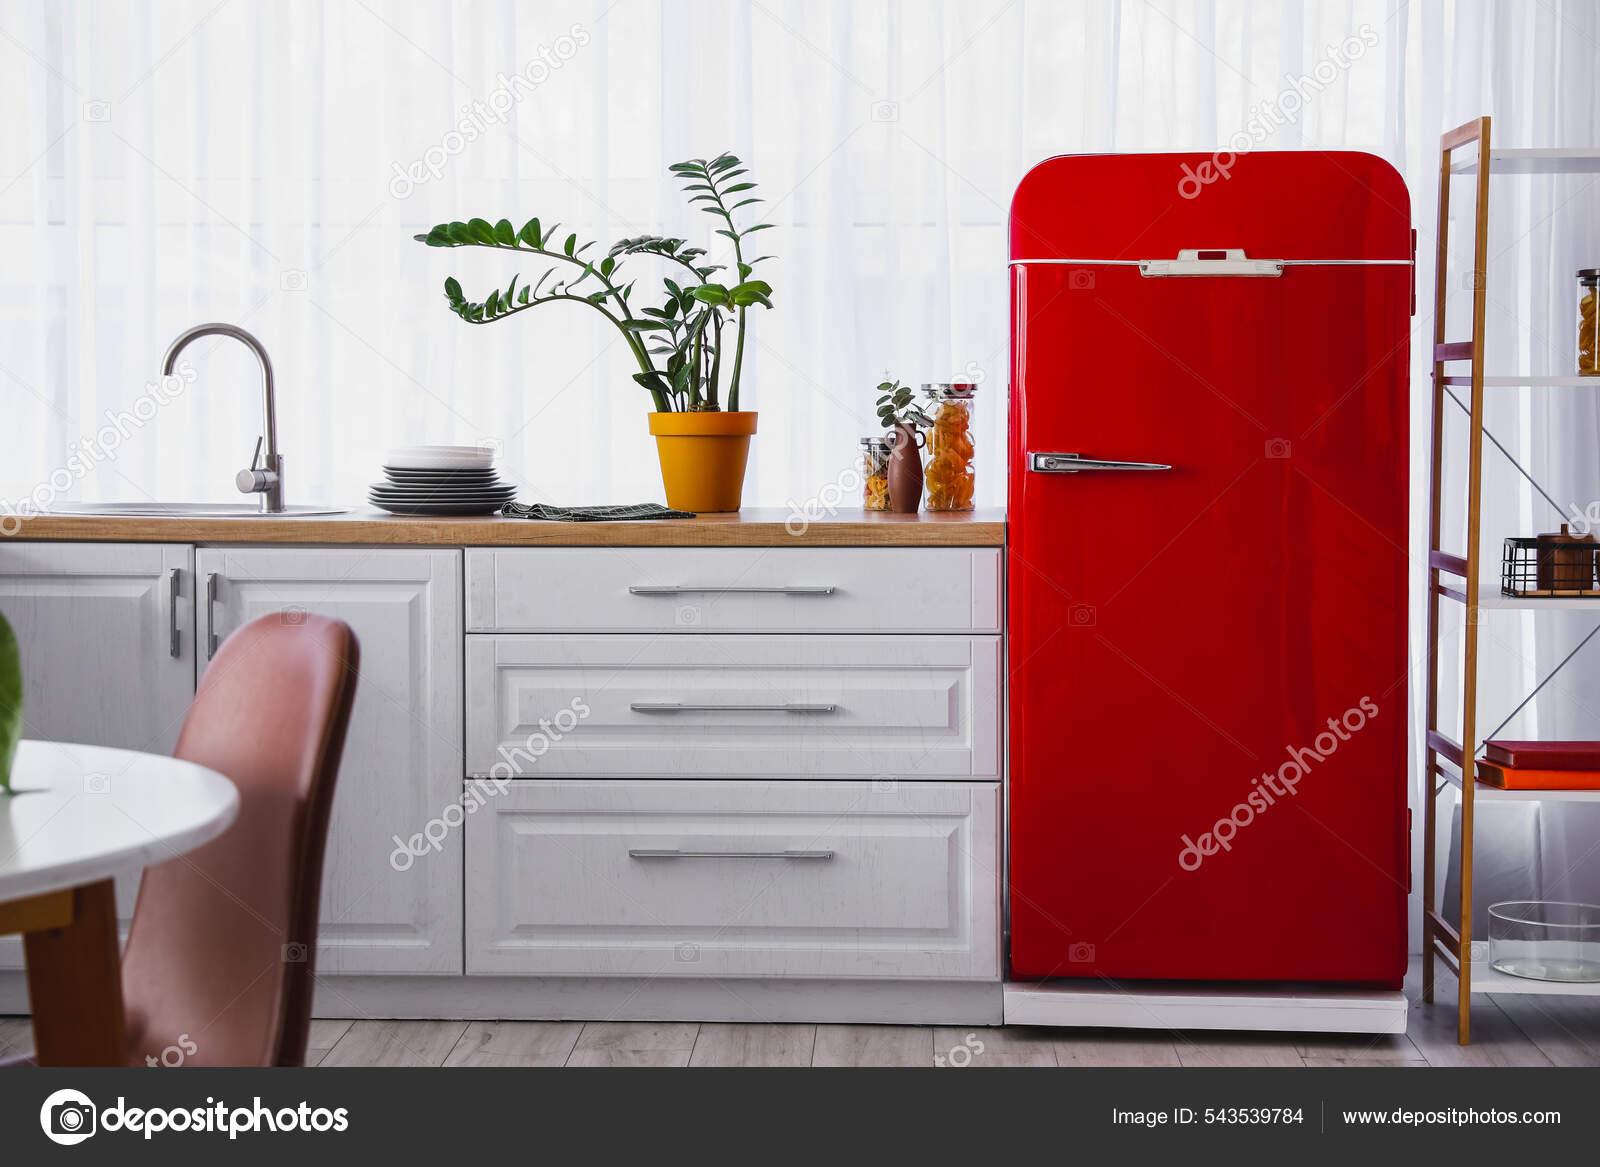 Stylish Red Refrigerator Counter Houseplant Kitchen Stock Photo by